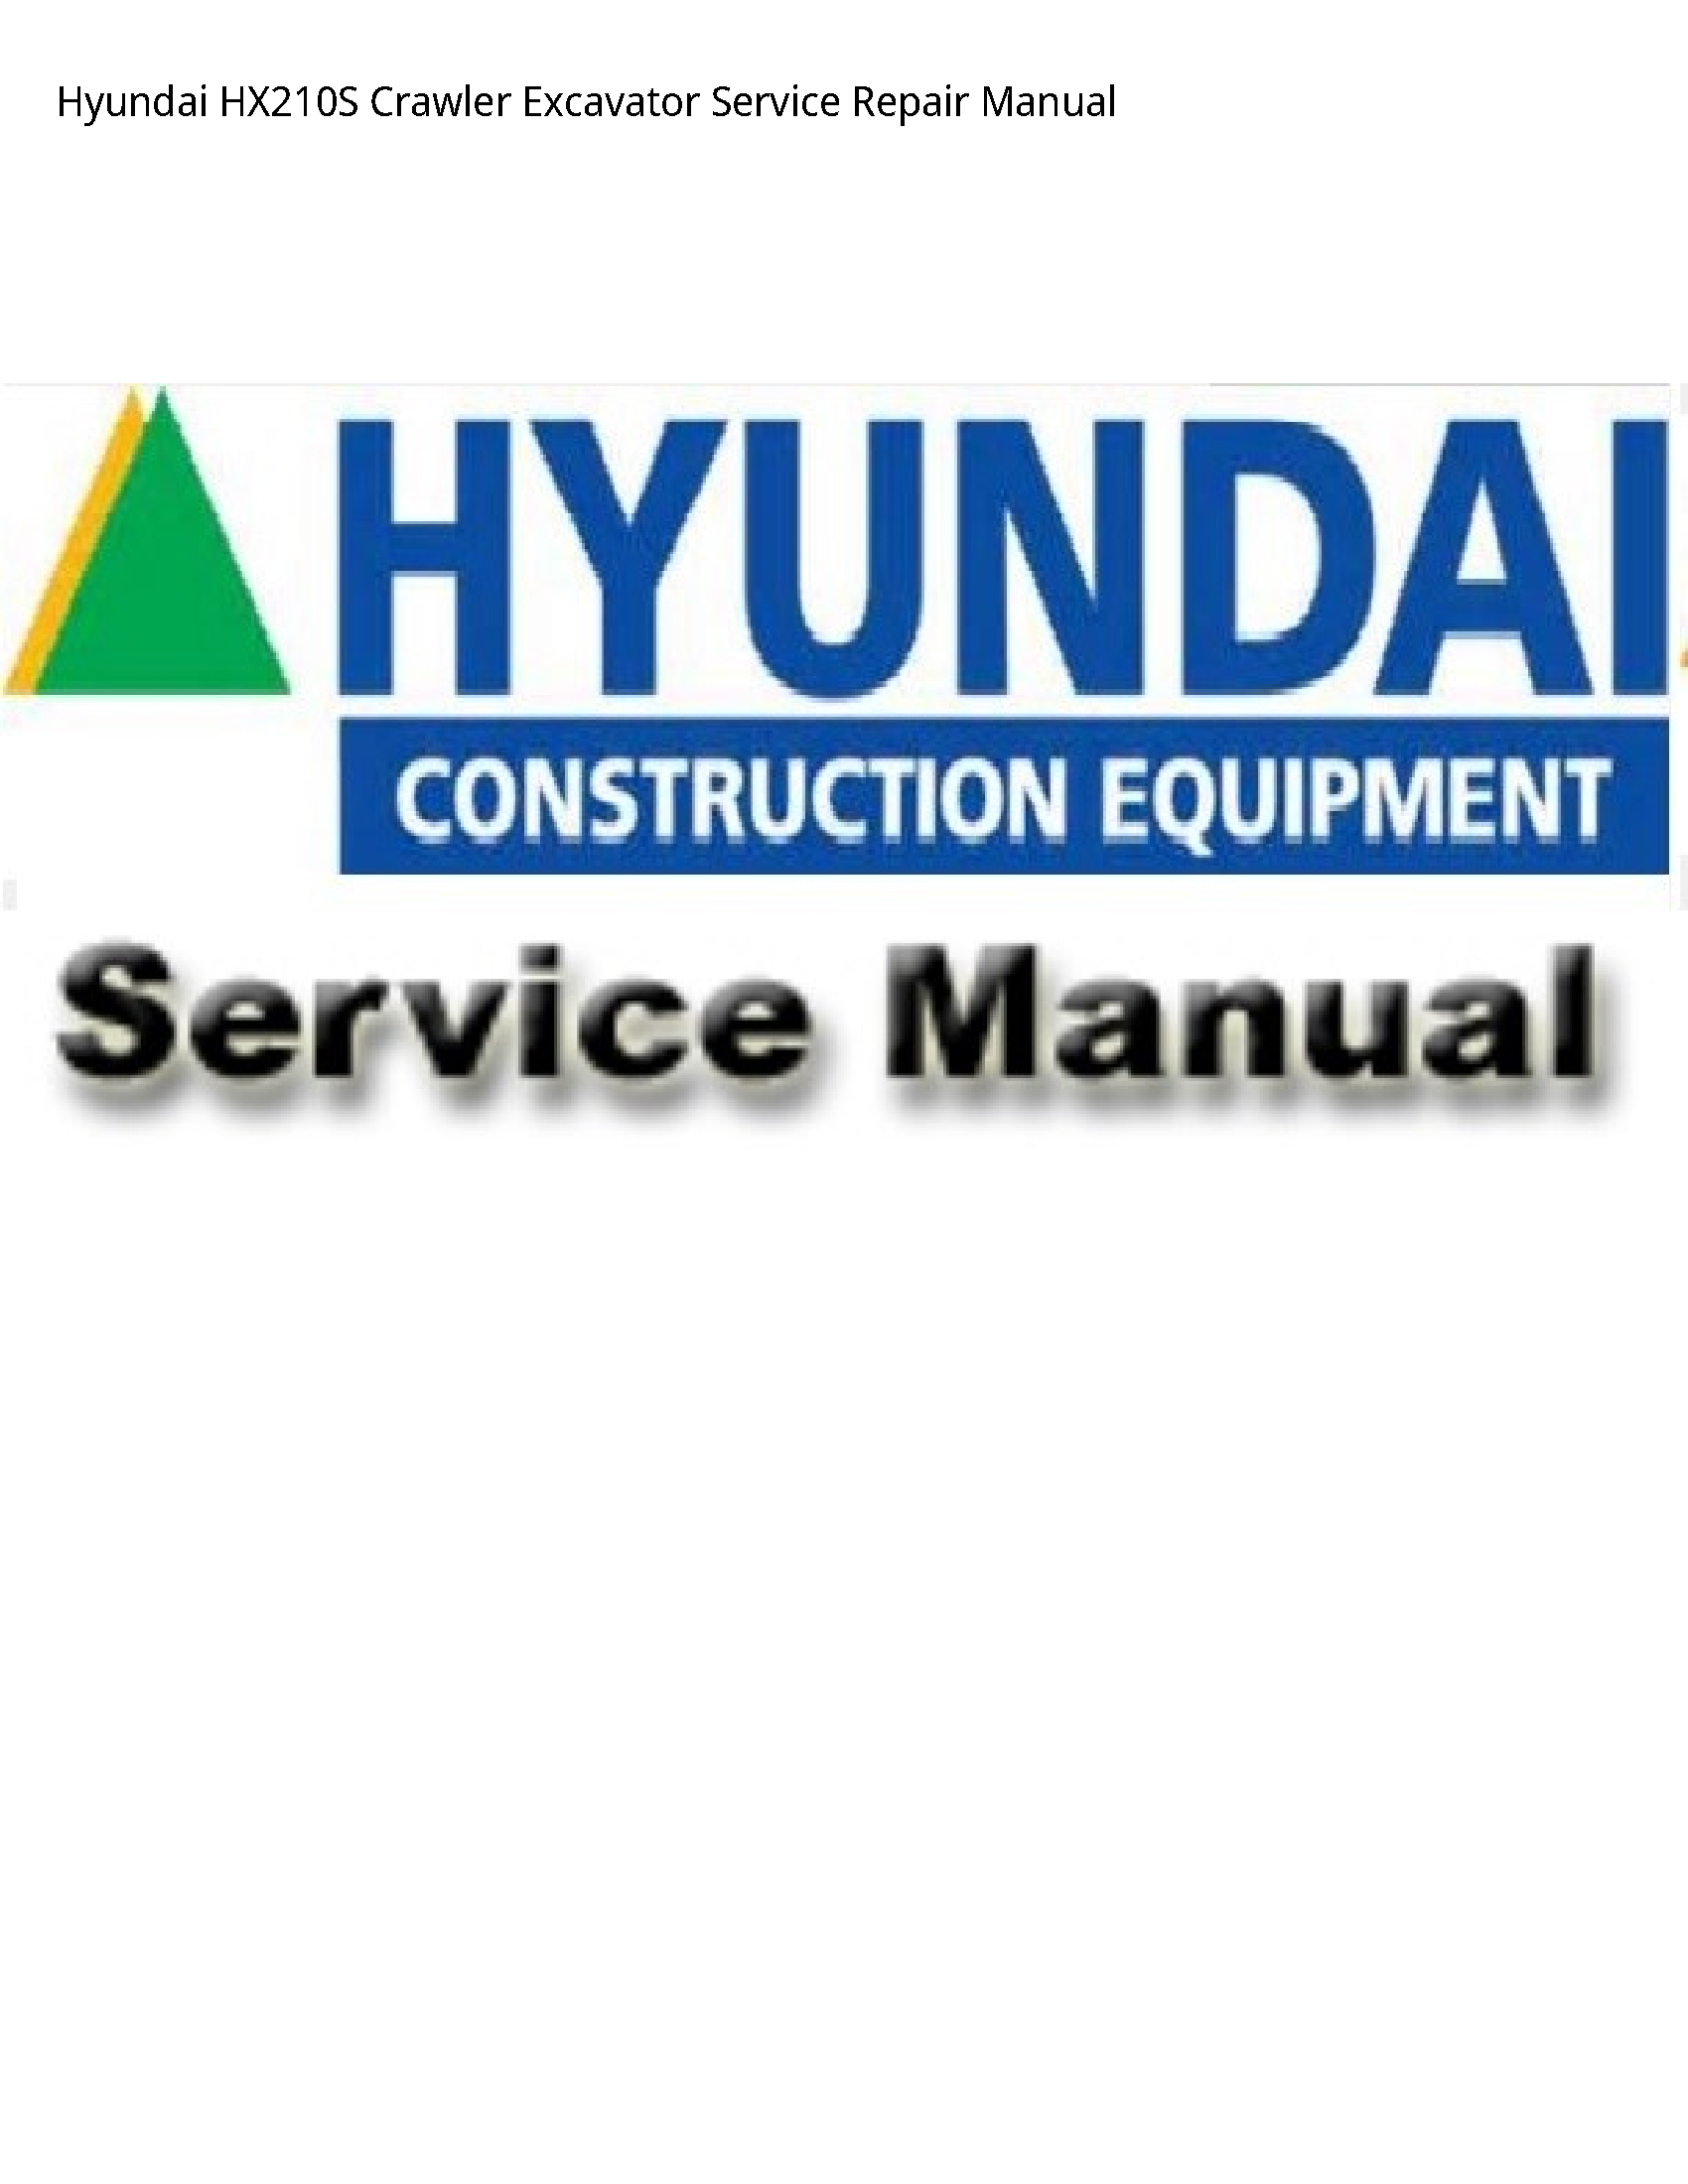 Hyundai HX210S Crawler Excavator manual